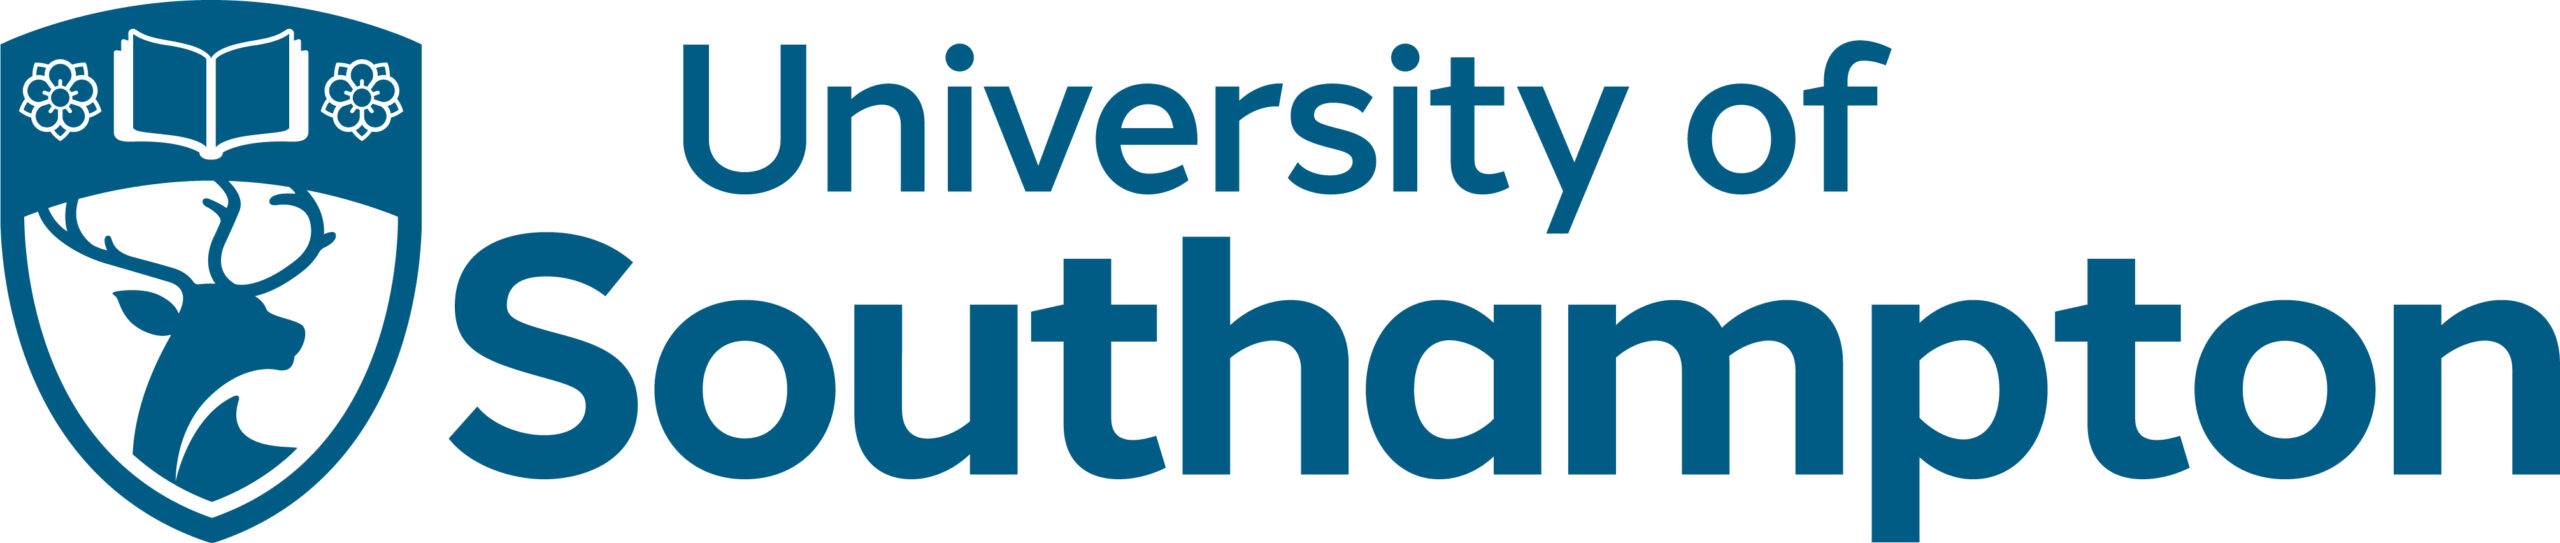 Southampton, University of Logo